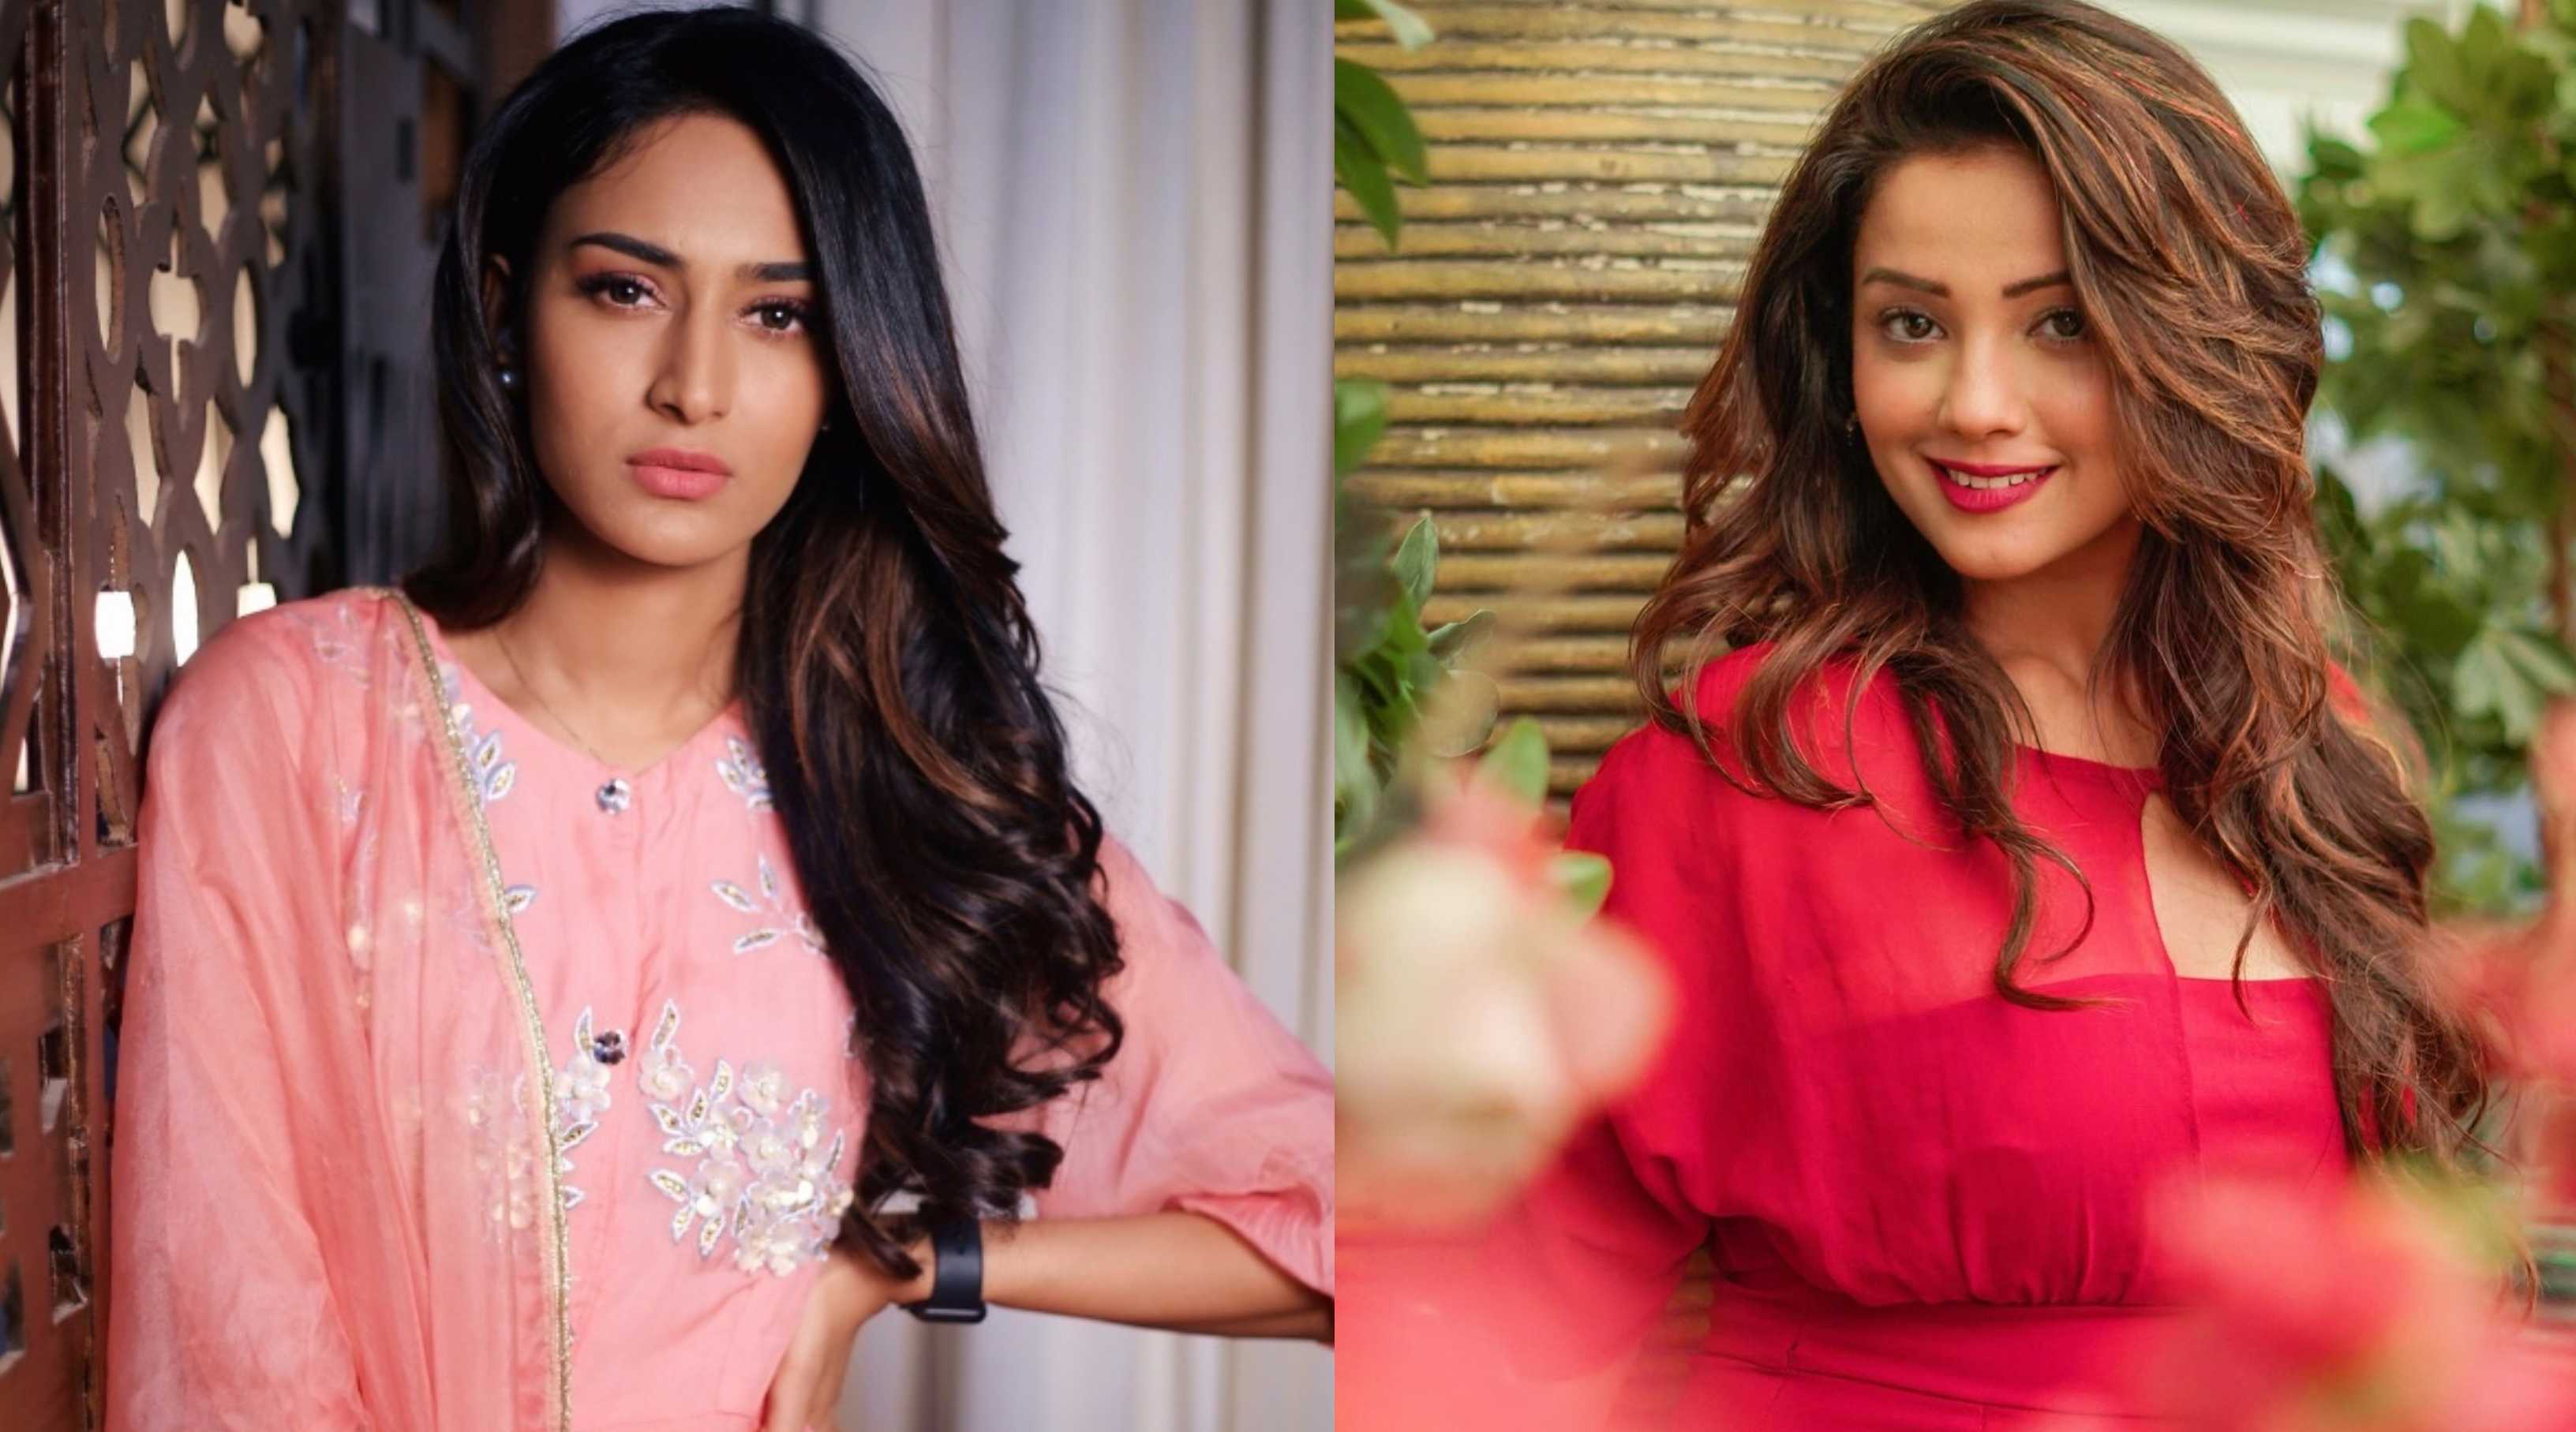 Jhalak Dikhhla Jaa season 10: Erica Fernandes and Adaa Khan approached to be contestants?